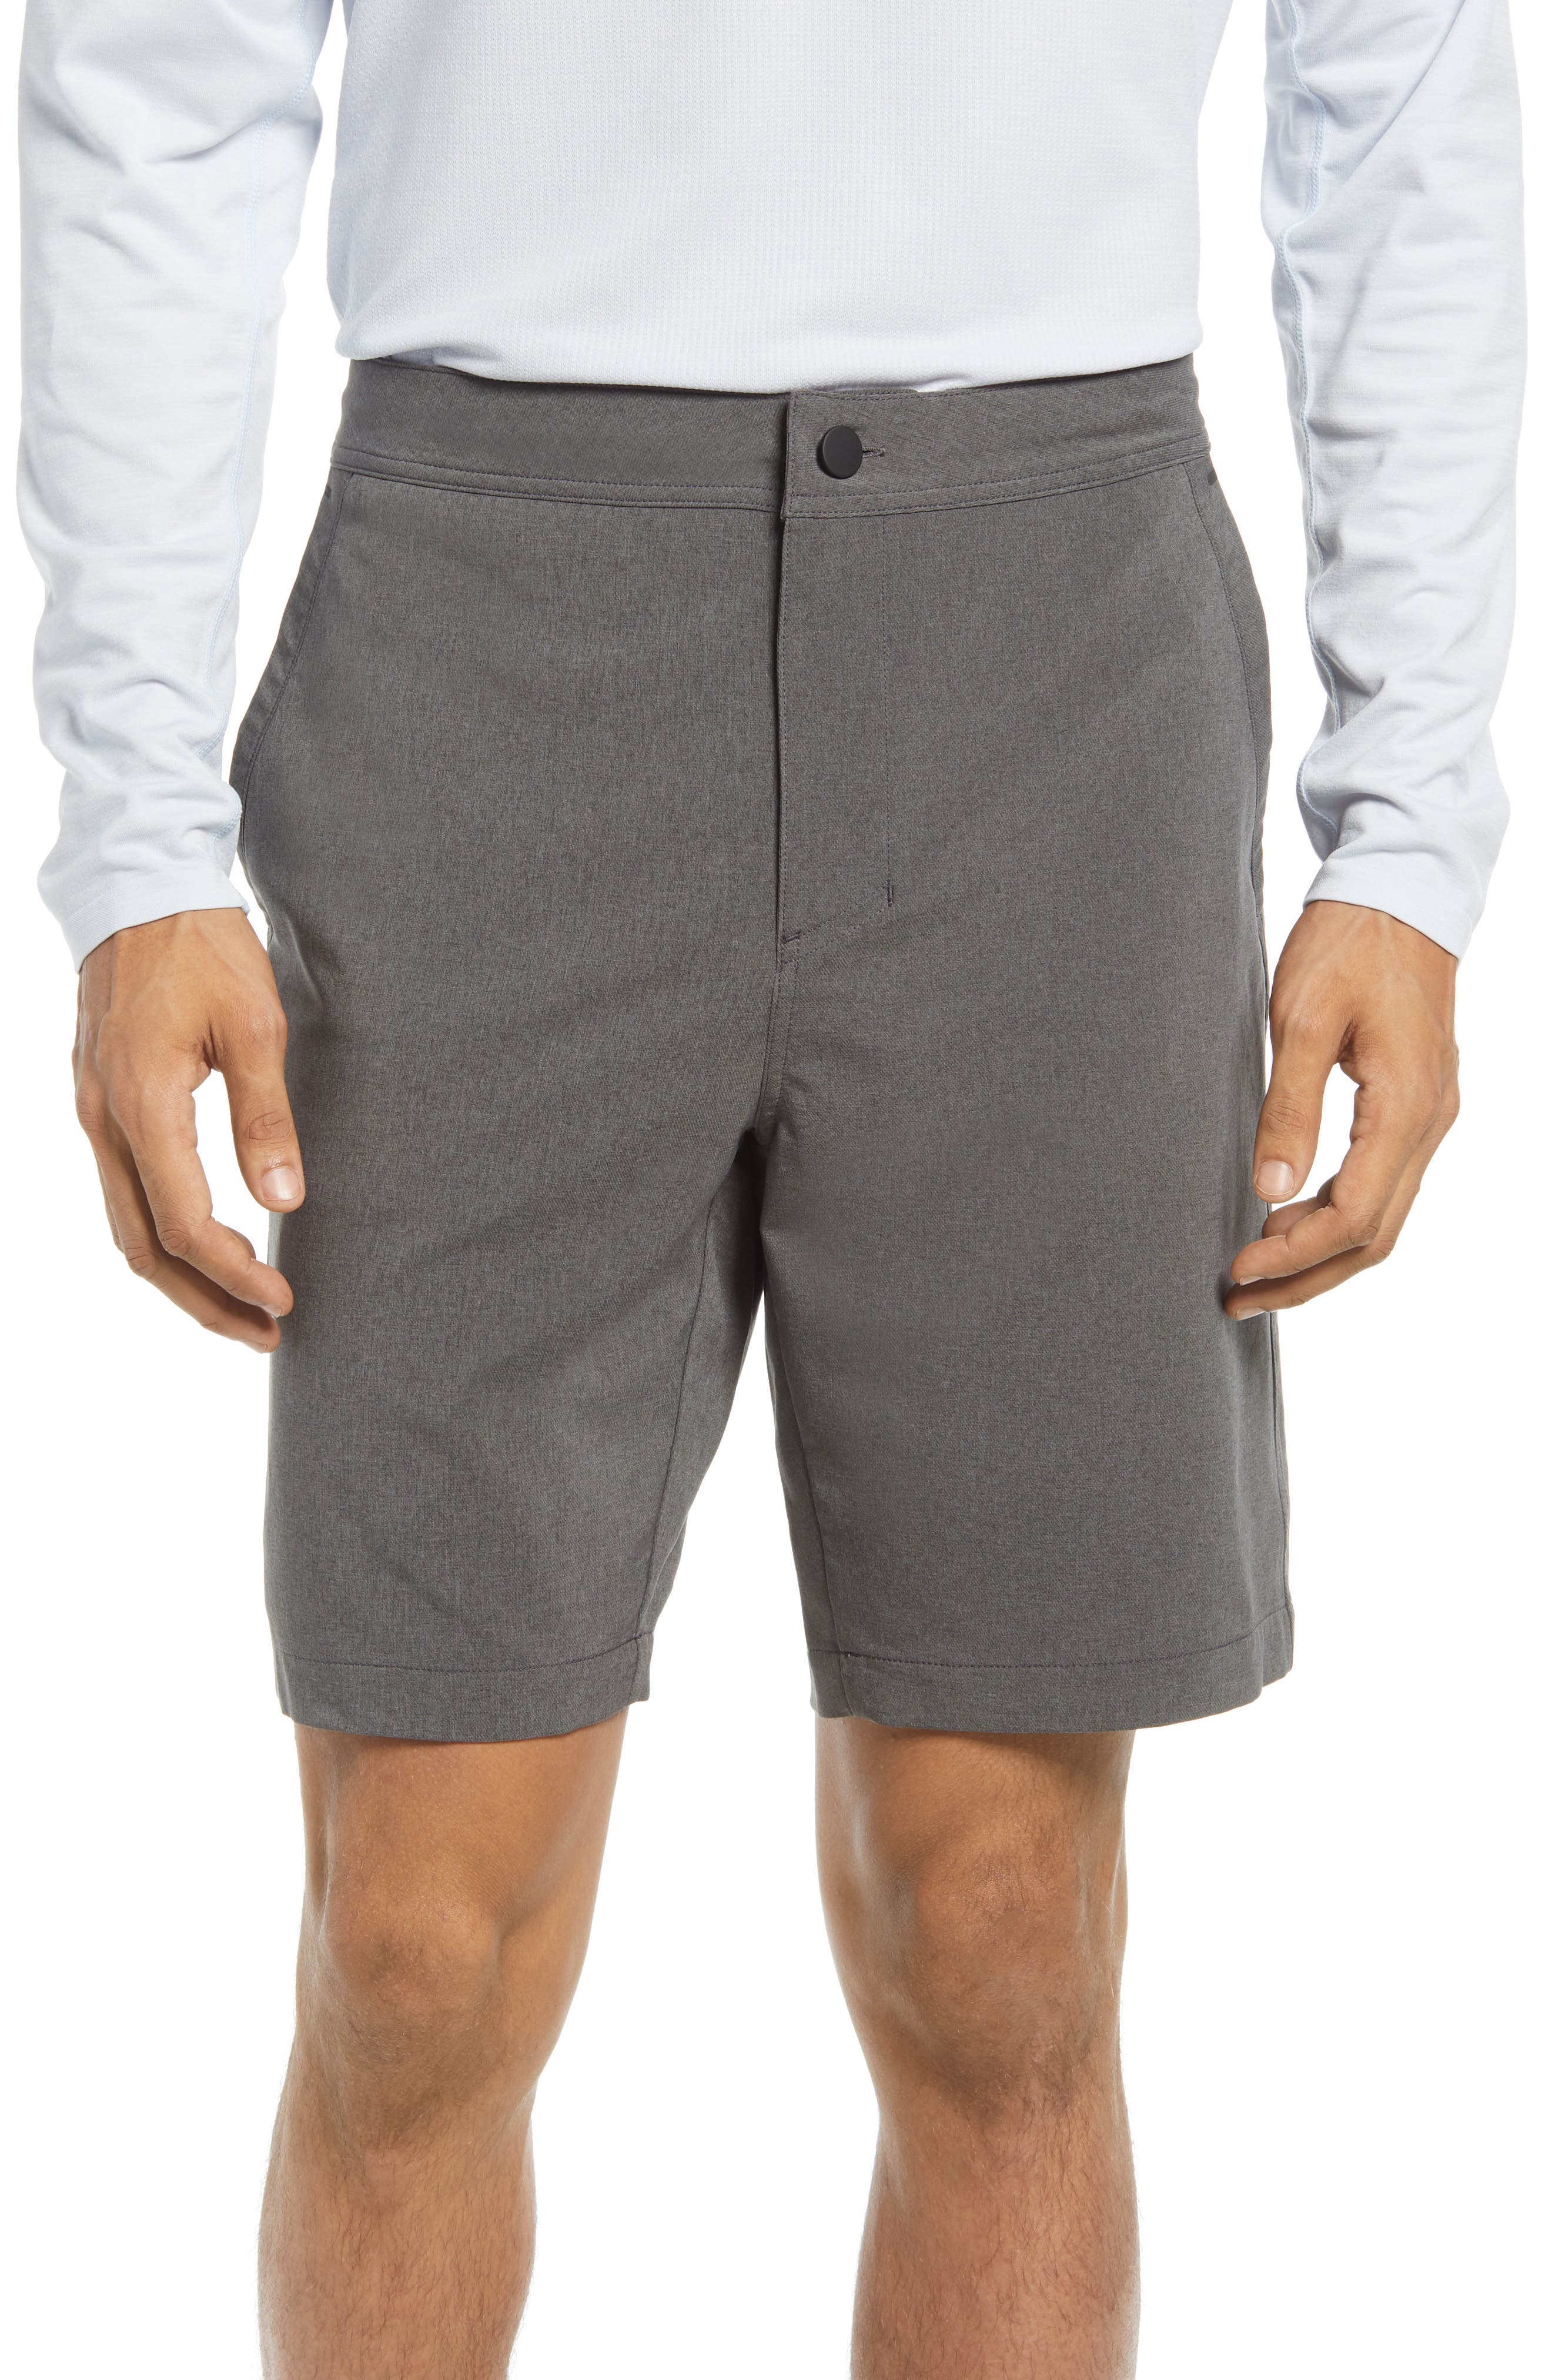 mens shorts for sale online